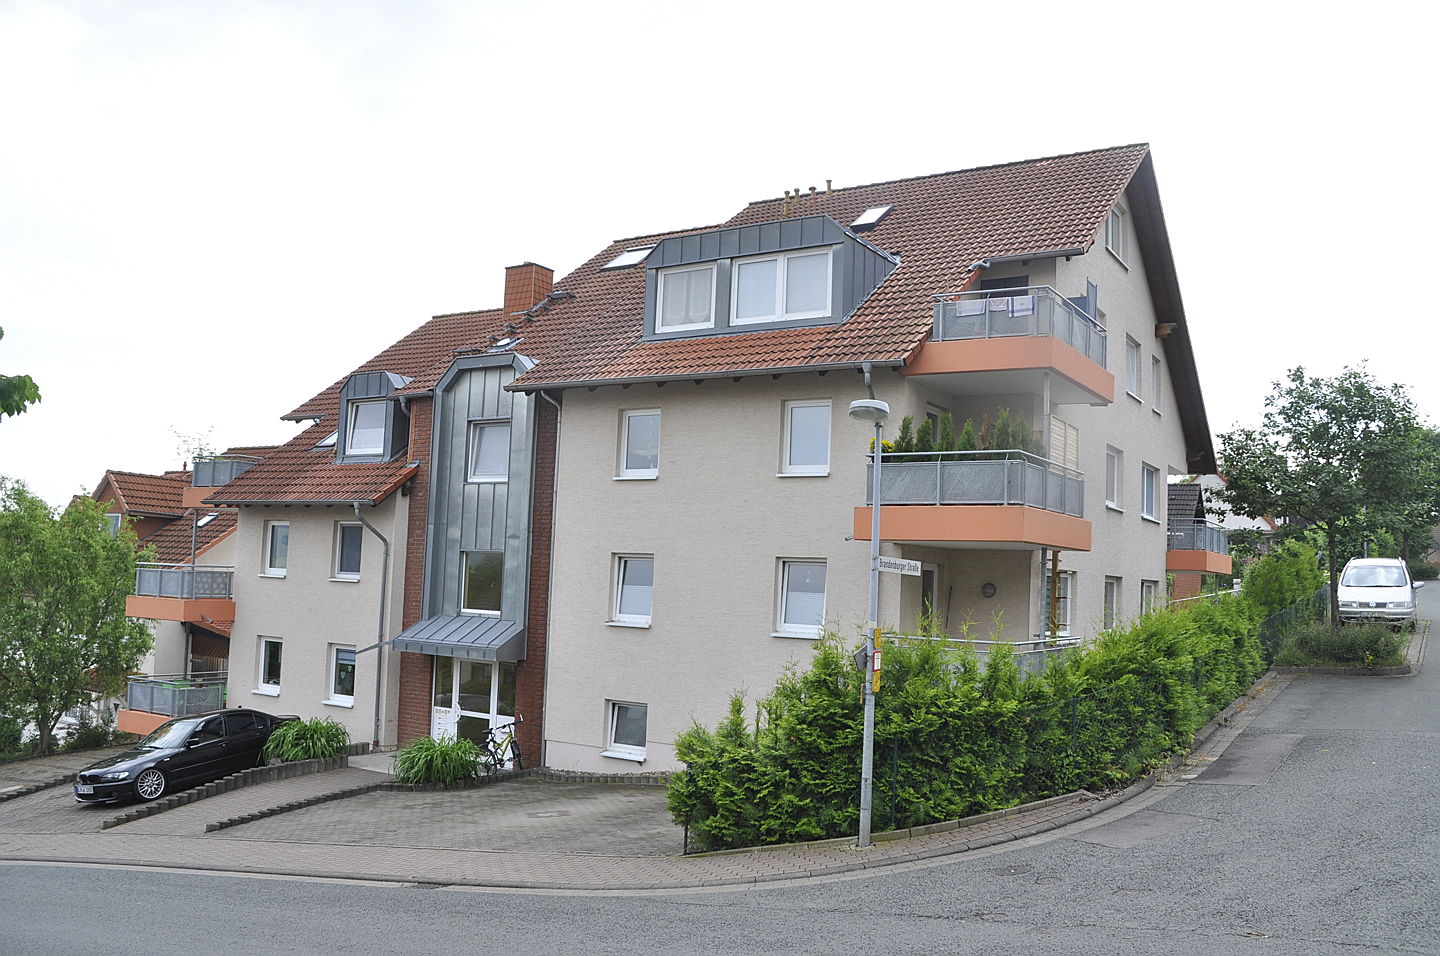  Bielefeld
- Mehrfamilienhaus in Lügde